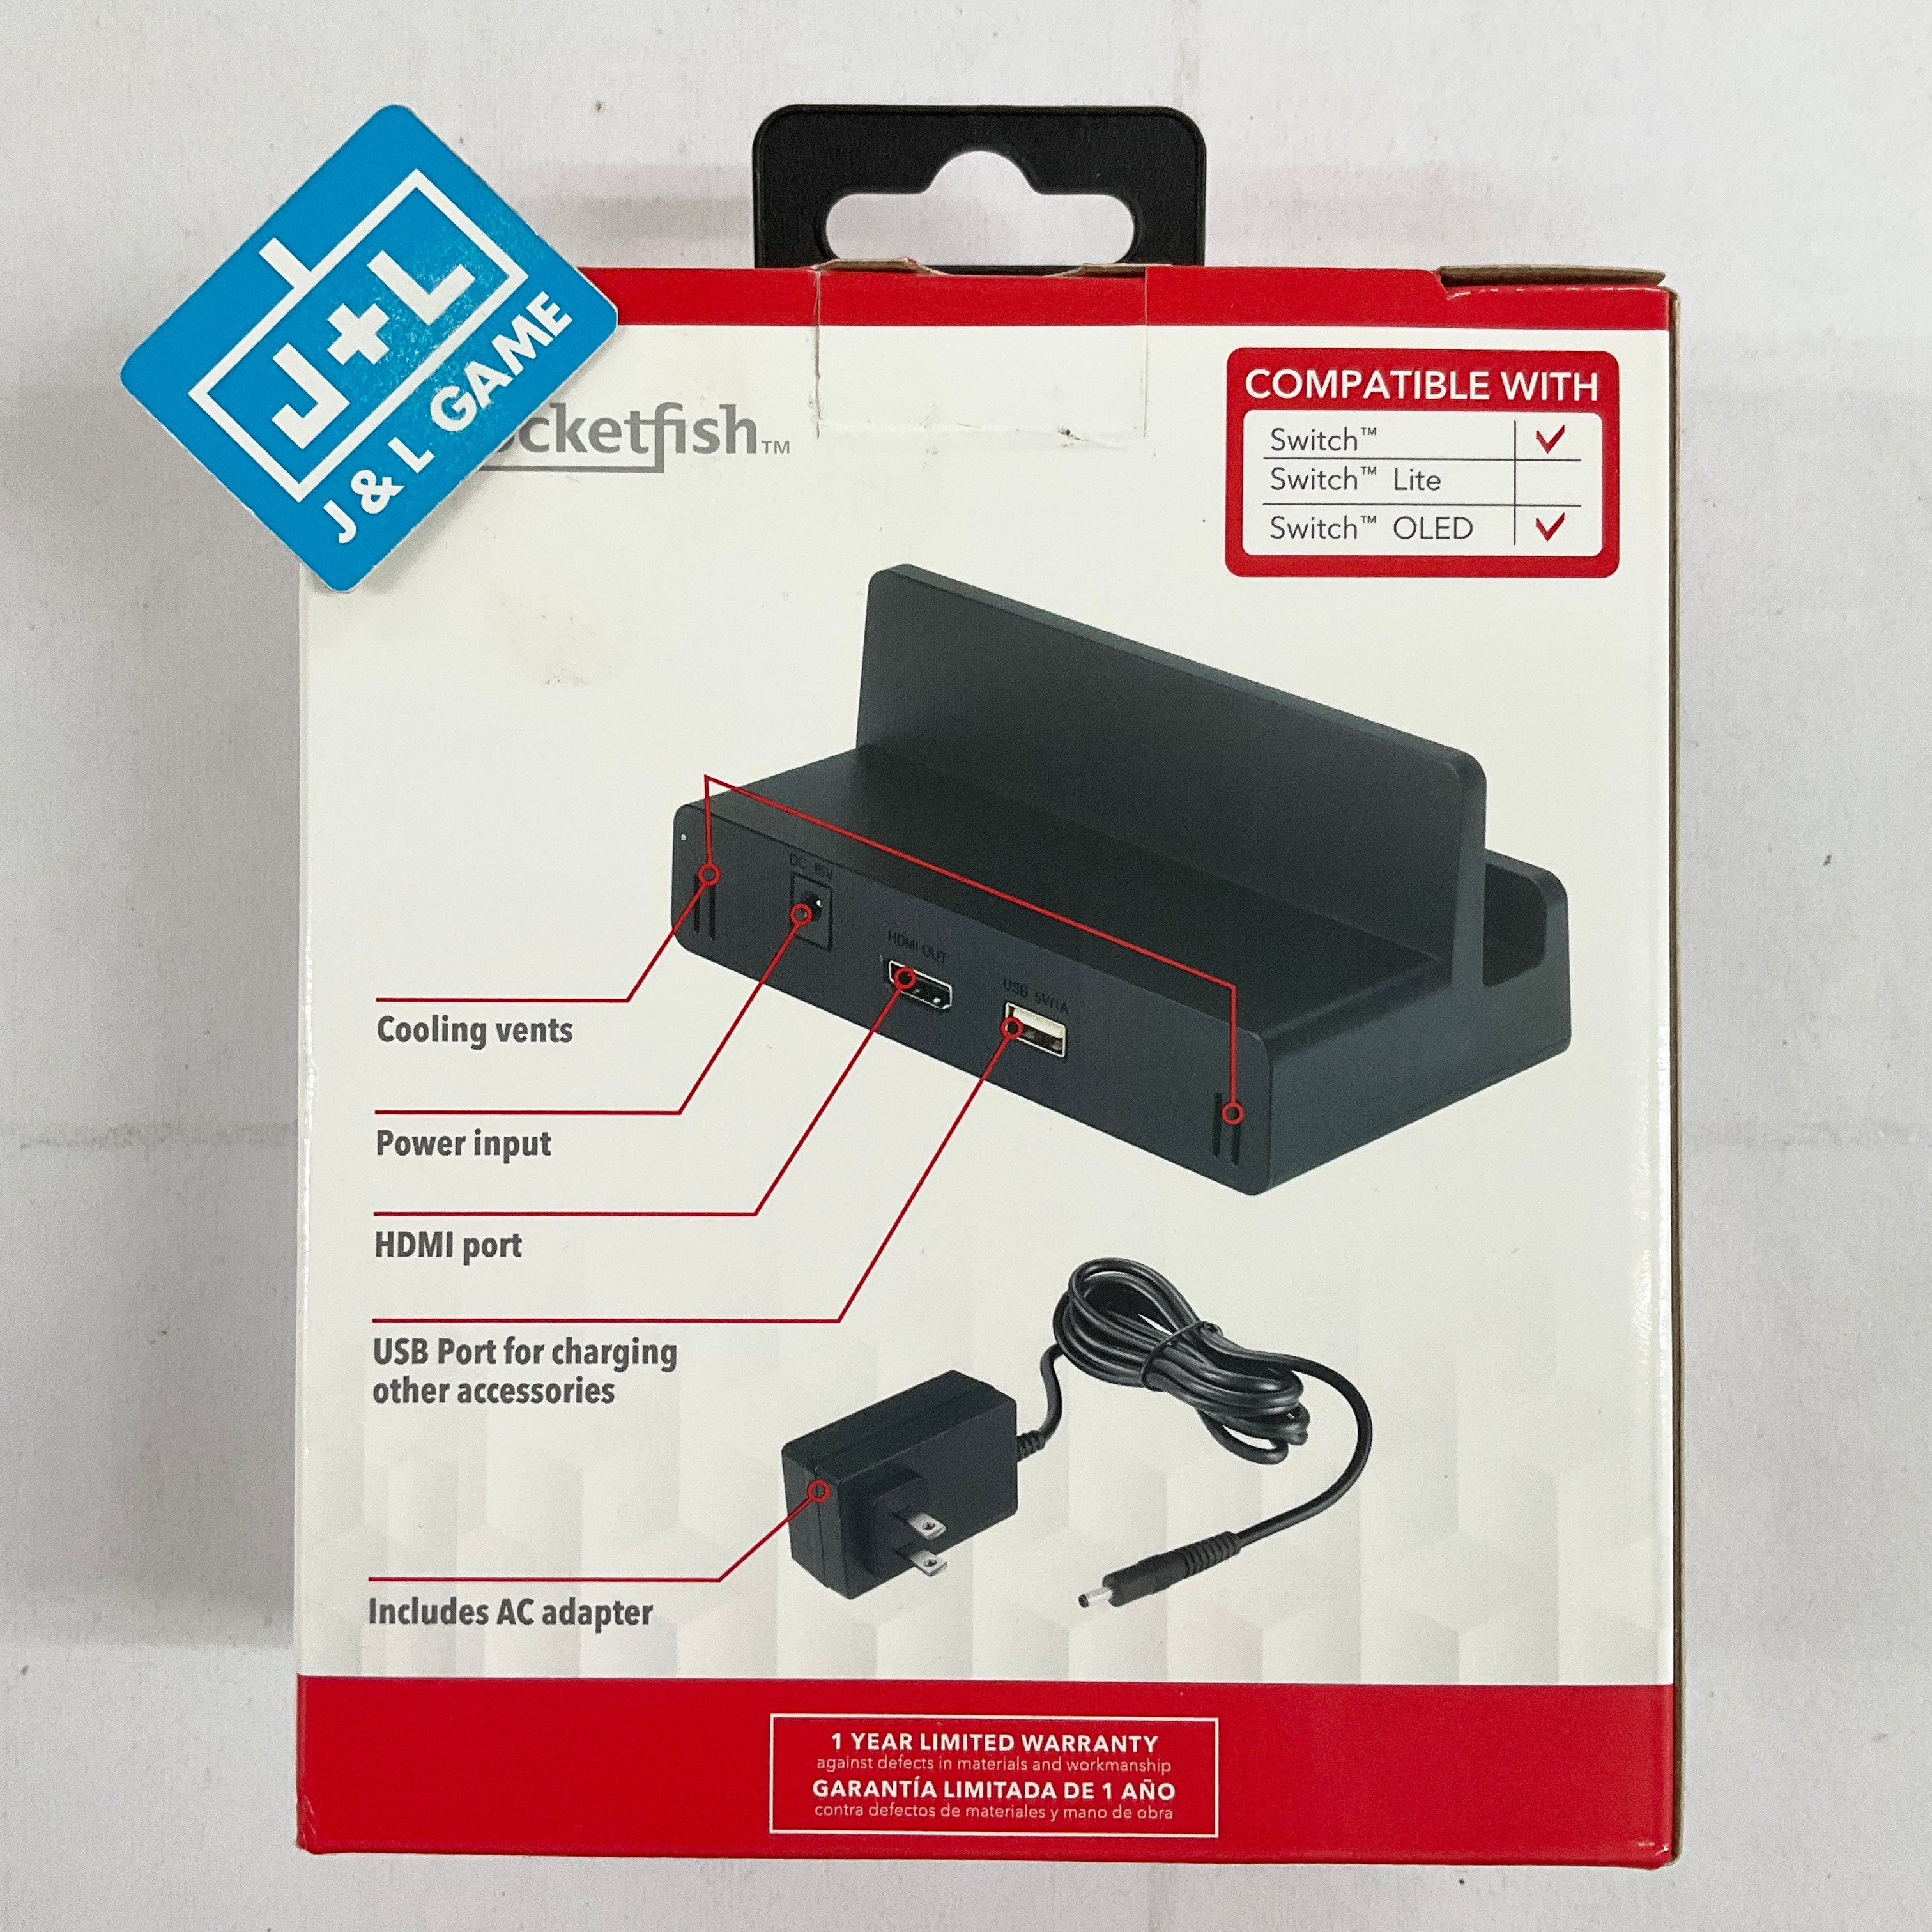 Rocketfish TV Dock Kit For Nintendo Switch (Black) - (NSW) Nintendo Switch Accessories Rocketfish   